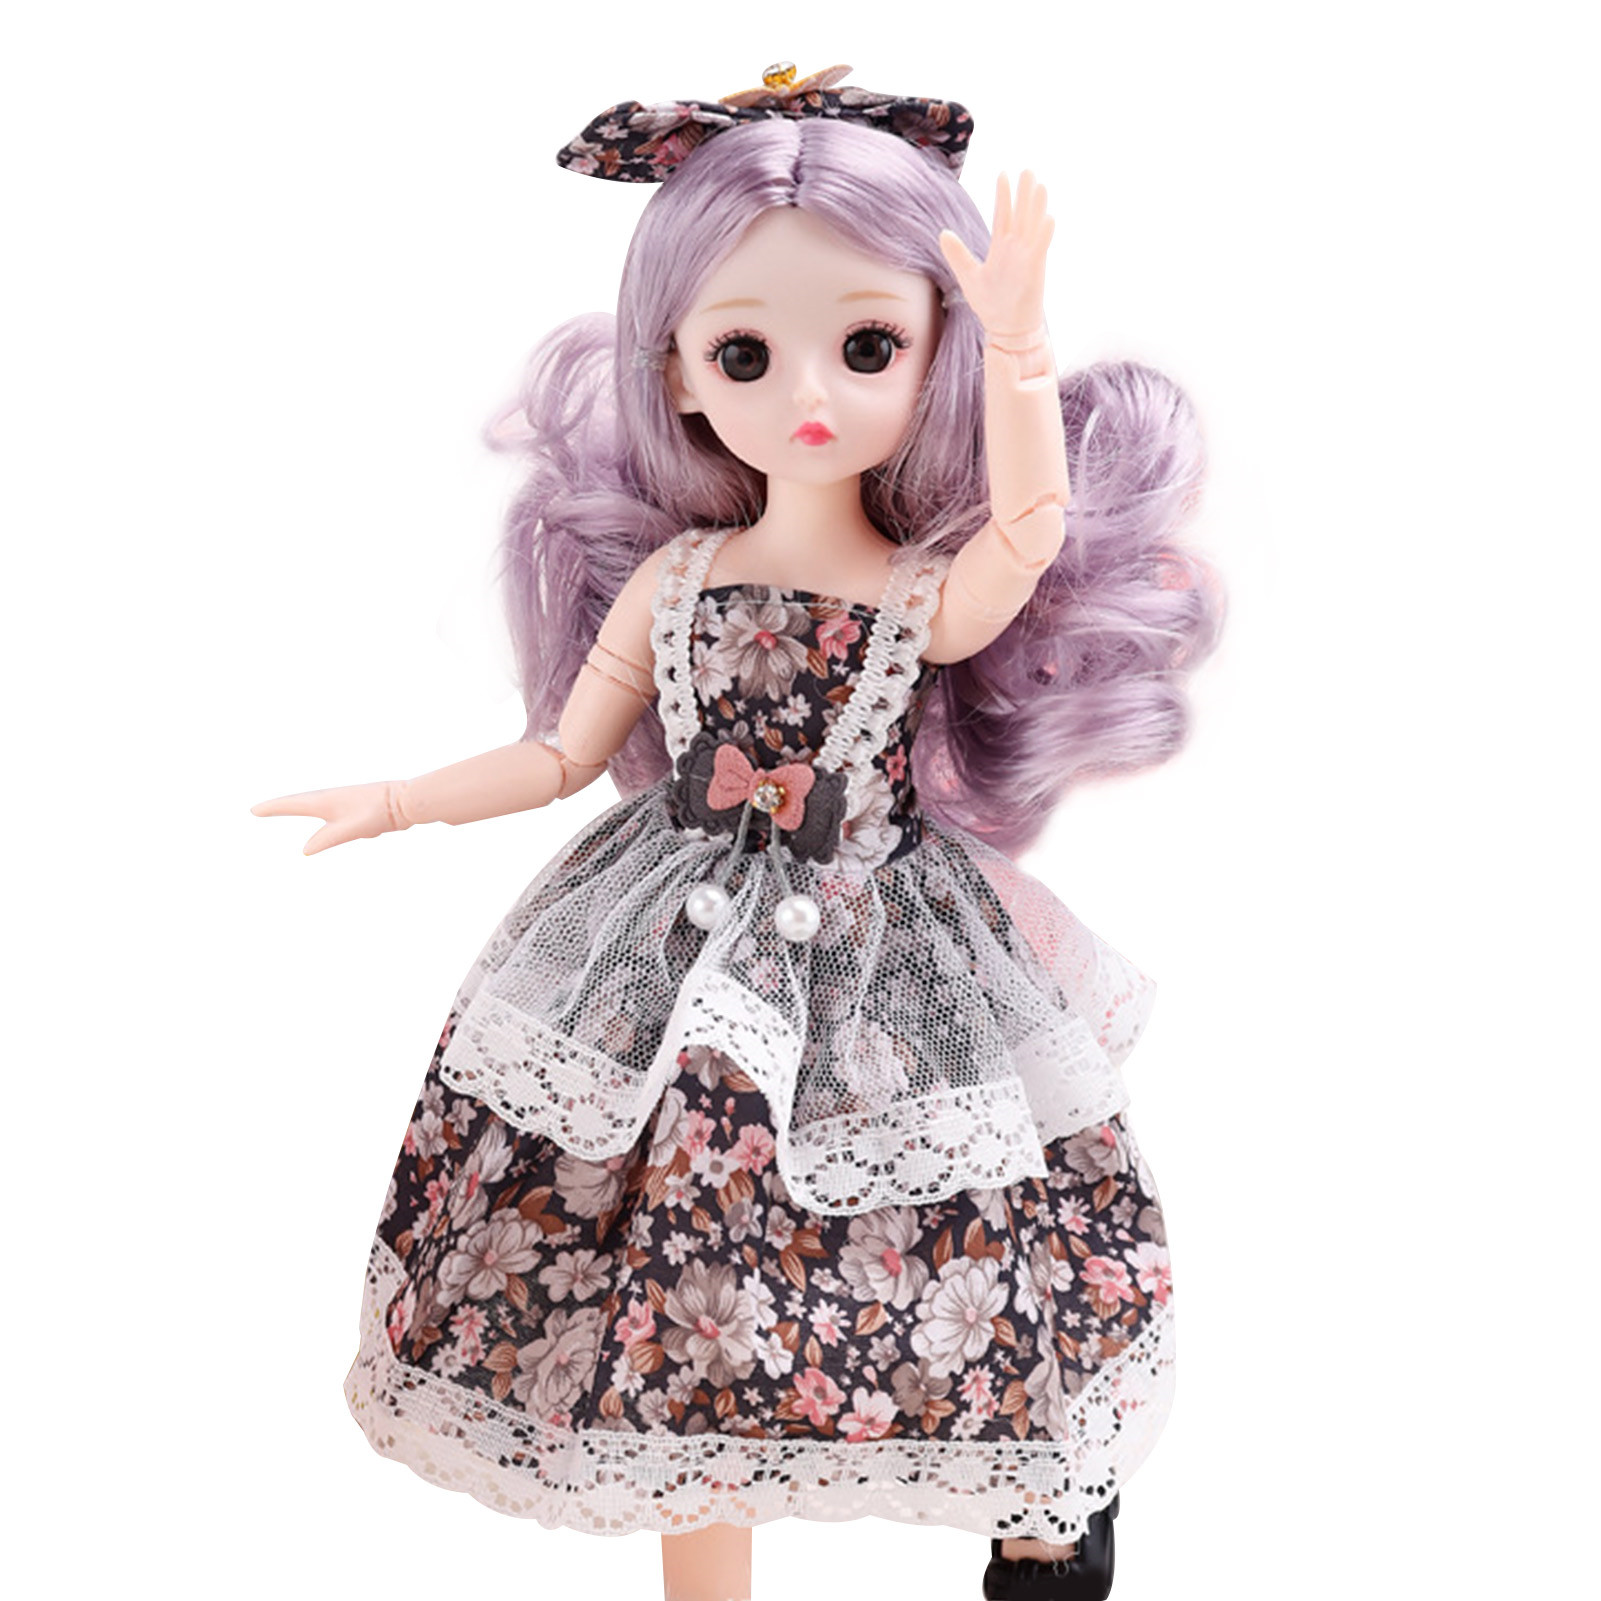 Details about  / 30cm BJD Dolls Cute Little Girl Dolls Dressed Princess DIY Toys Girls Gift